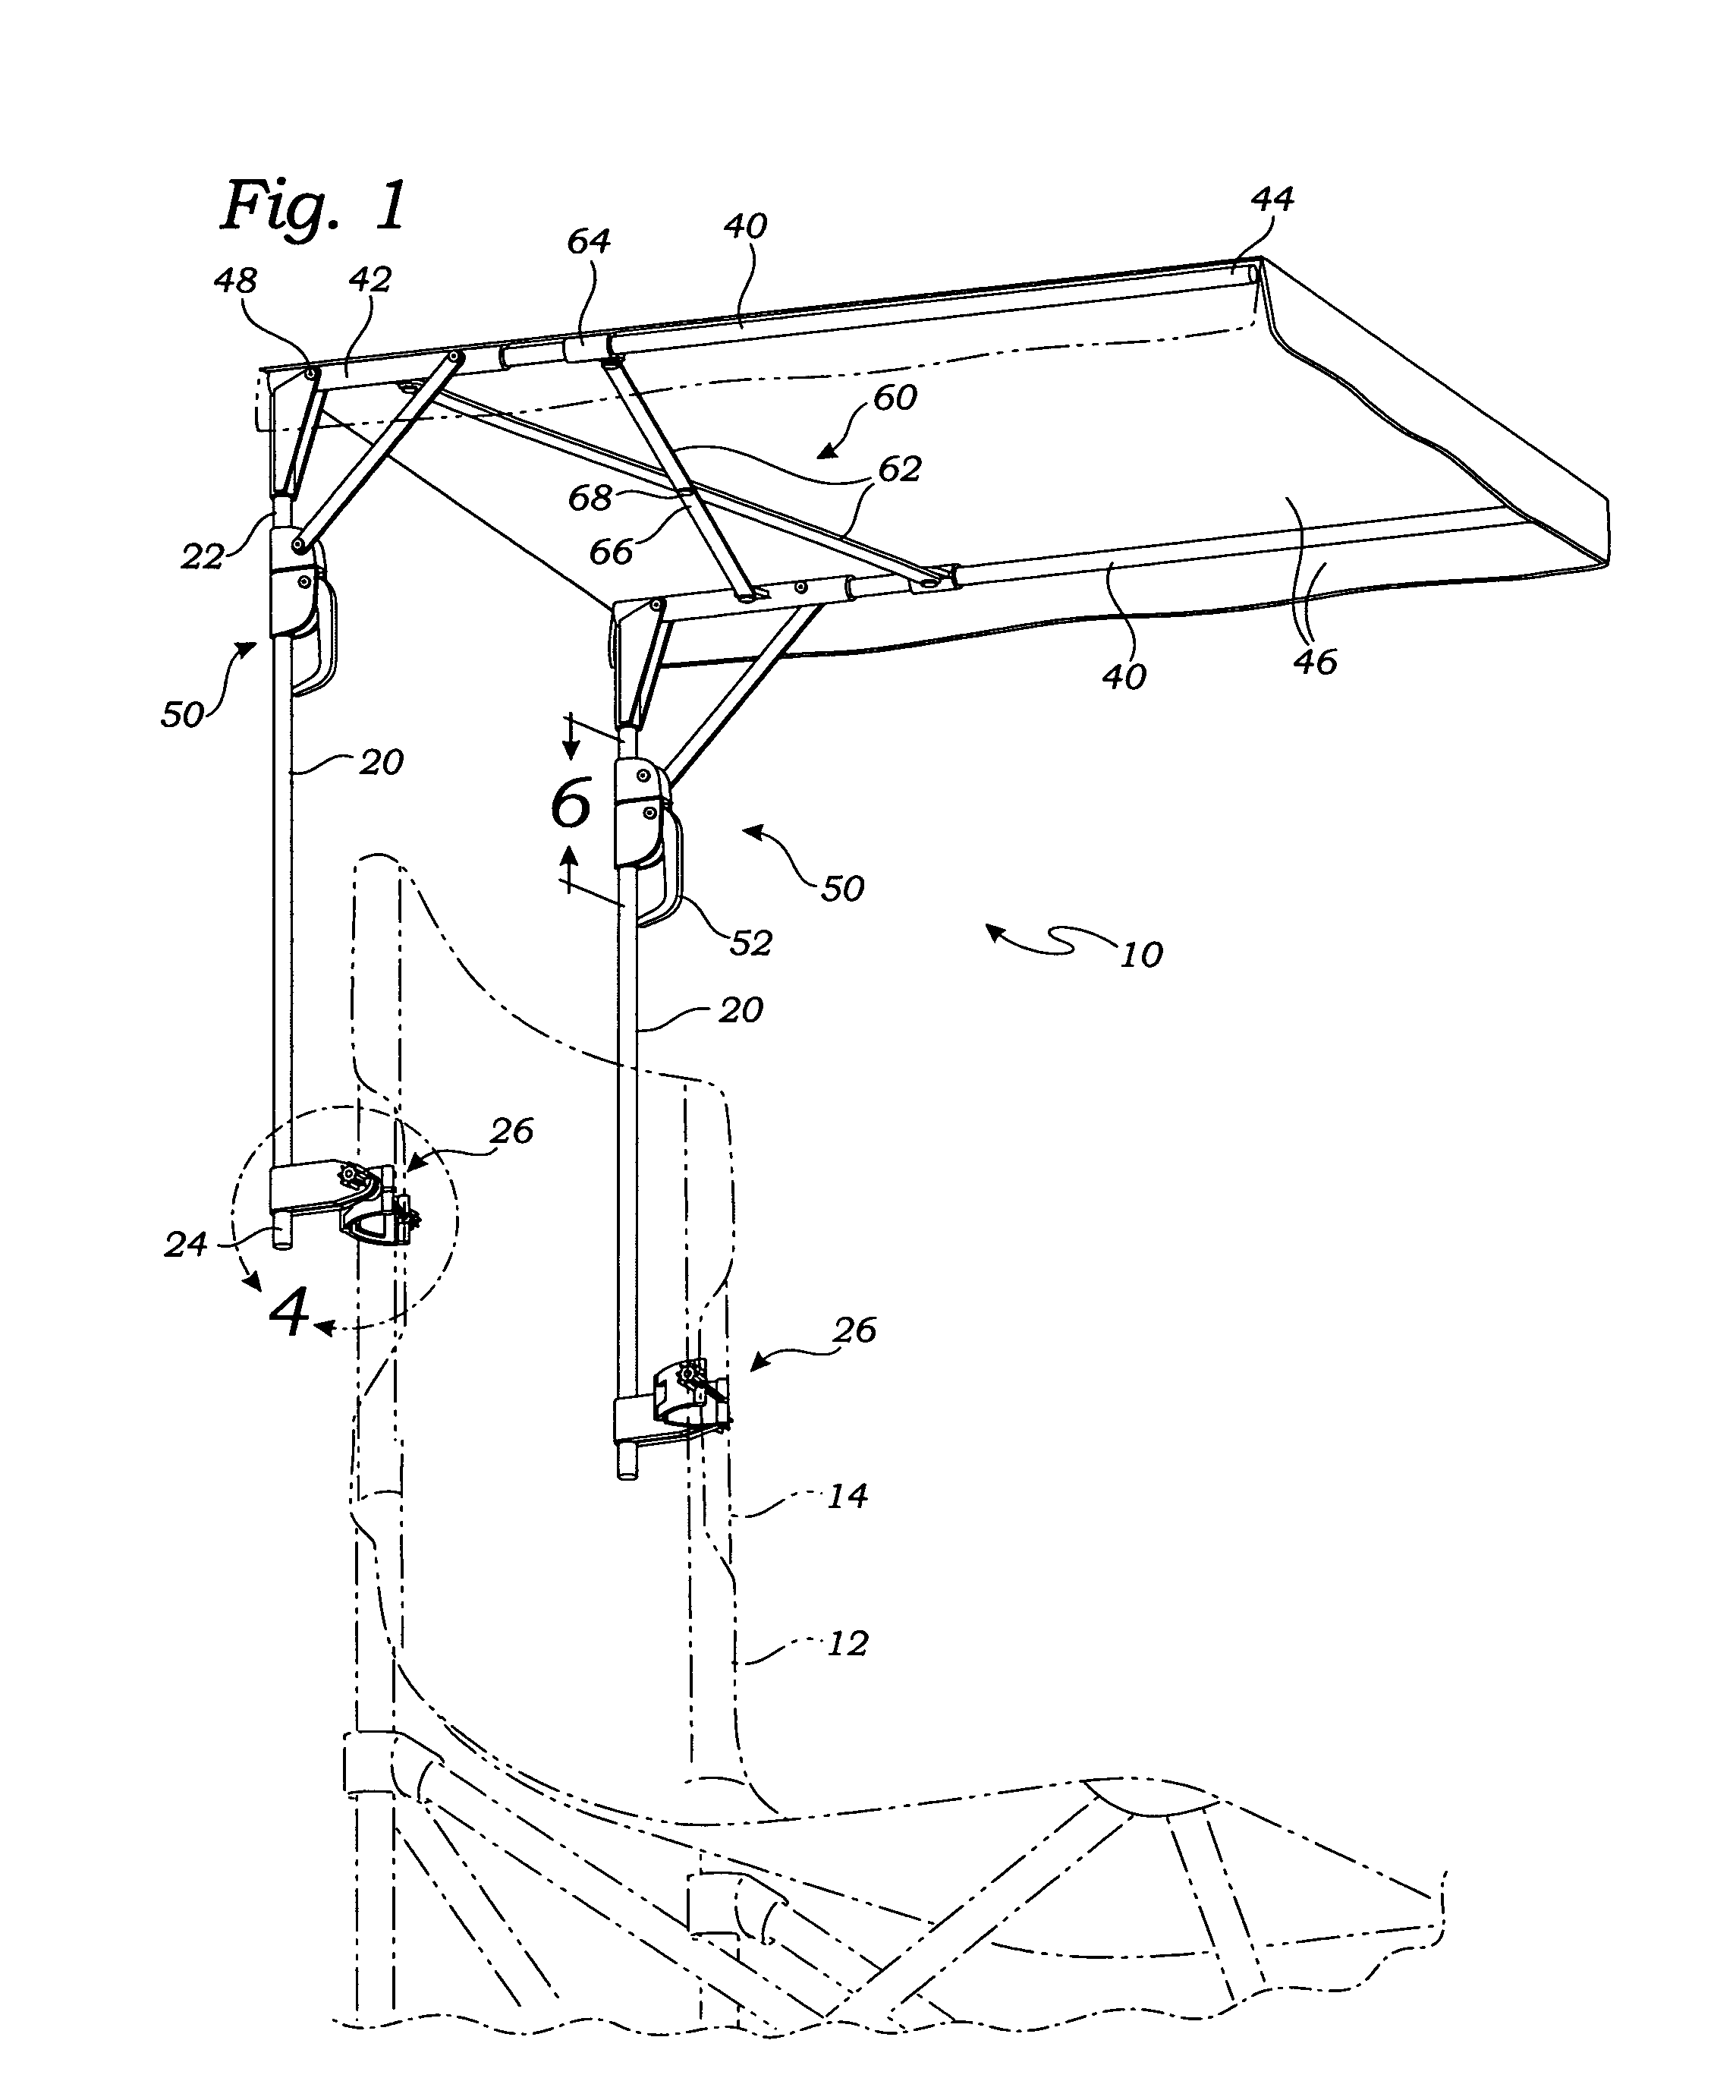 Sunshade apparatus